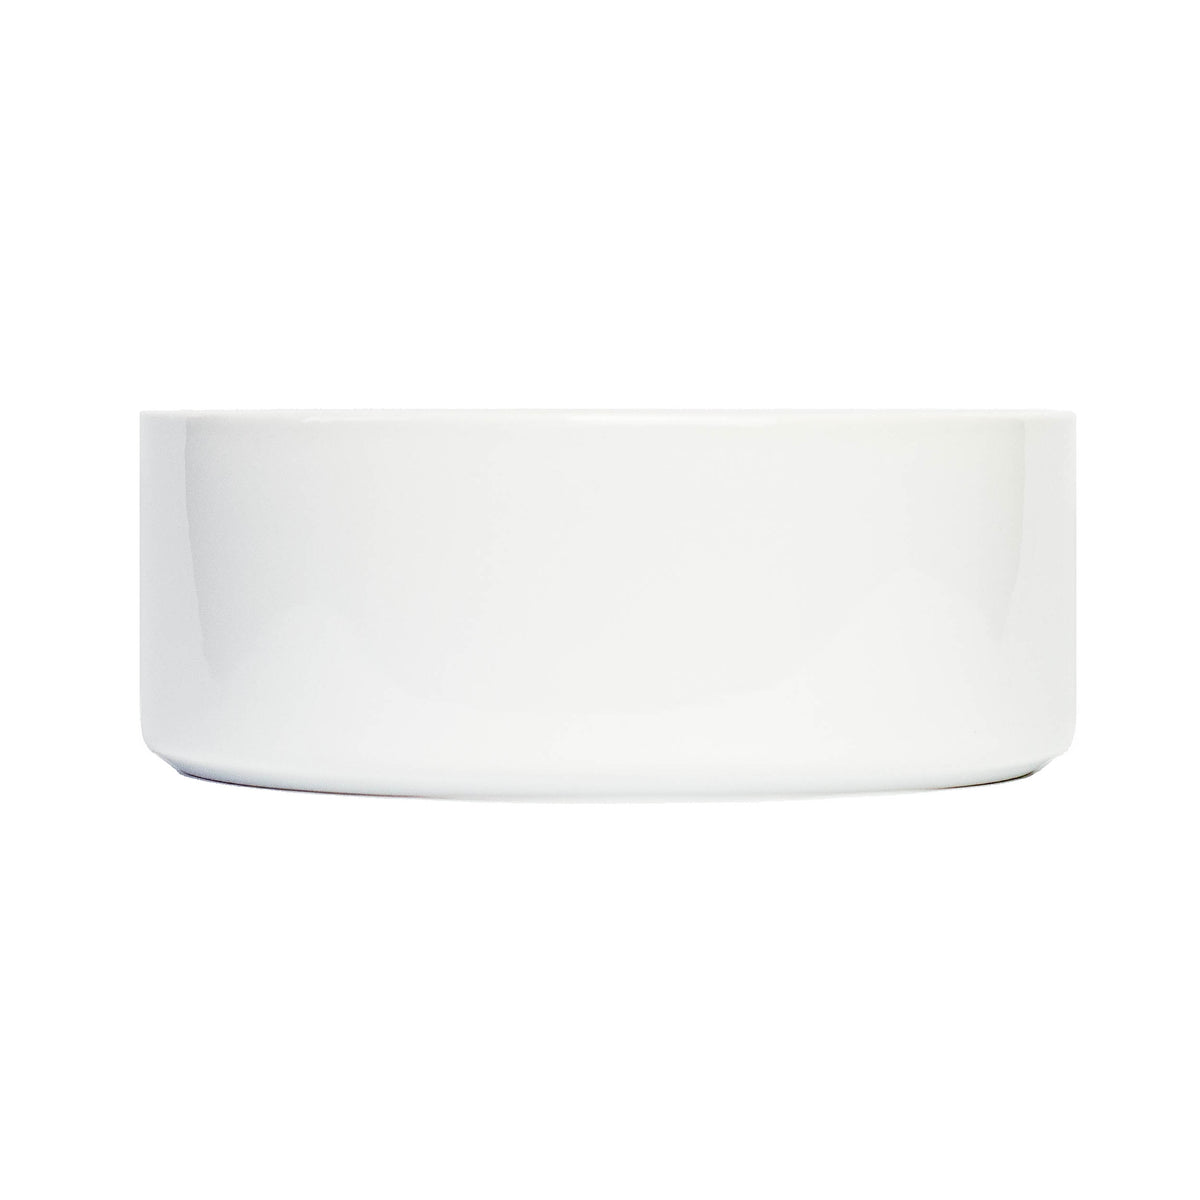 Personalised bowl for dogs / ceramic - 22oz 650ml (design 7)